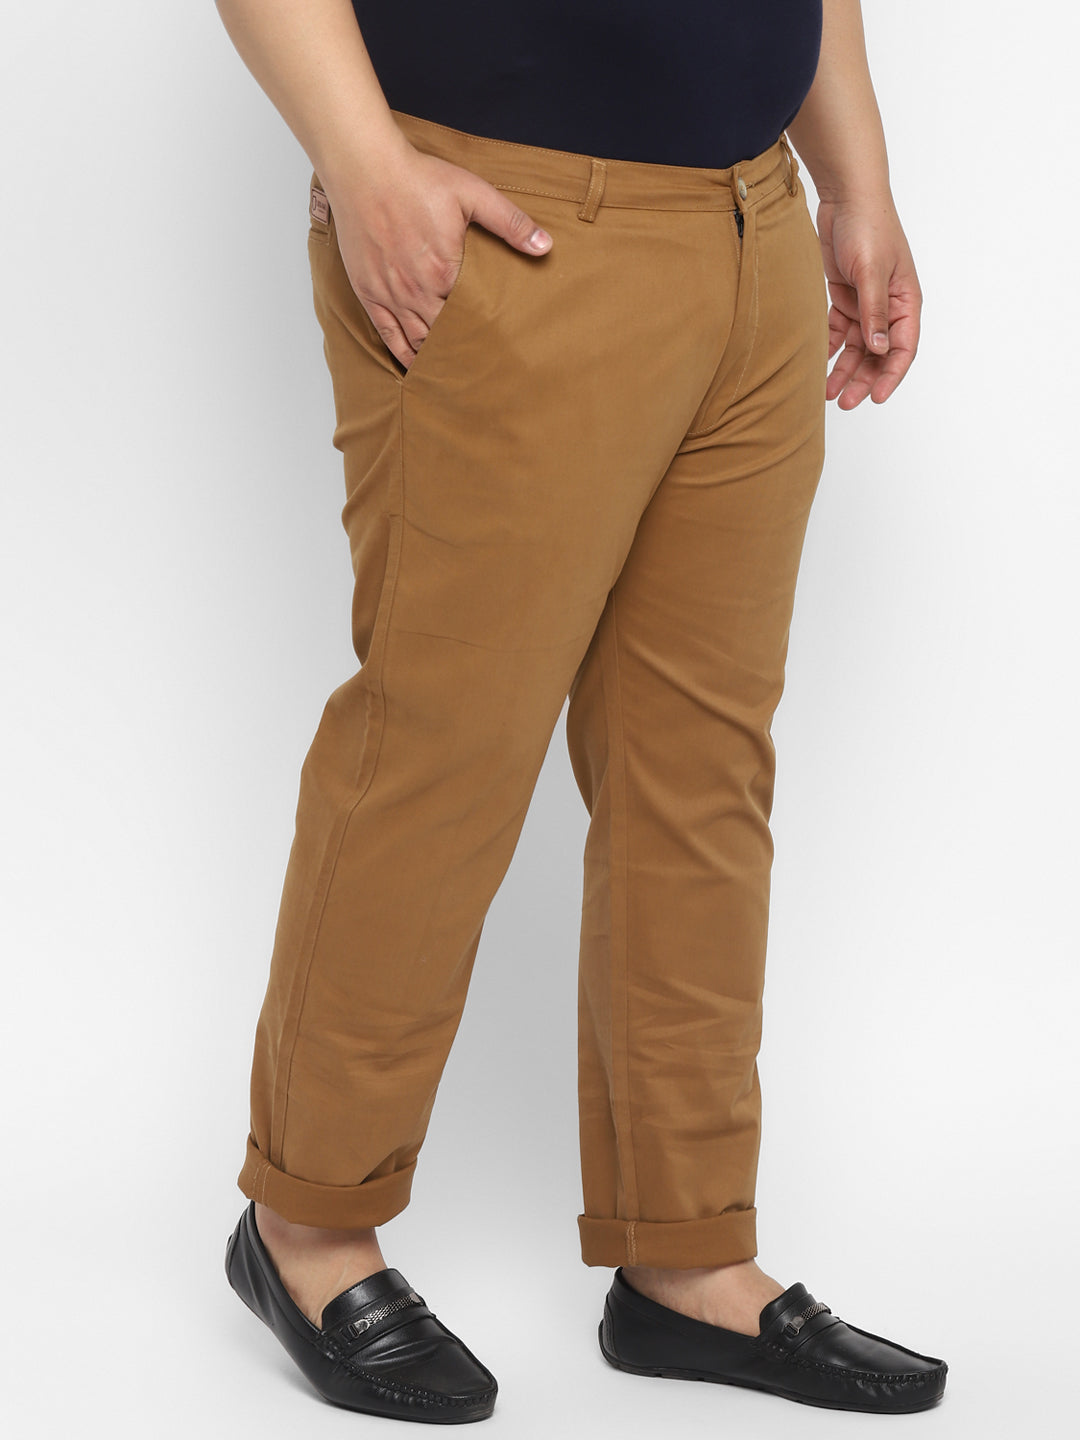 Plus Men's Dark Khaki Cotton Regular Fit Casual Chinos Trousers Stretch